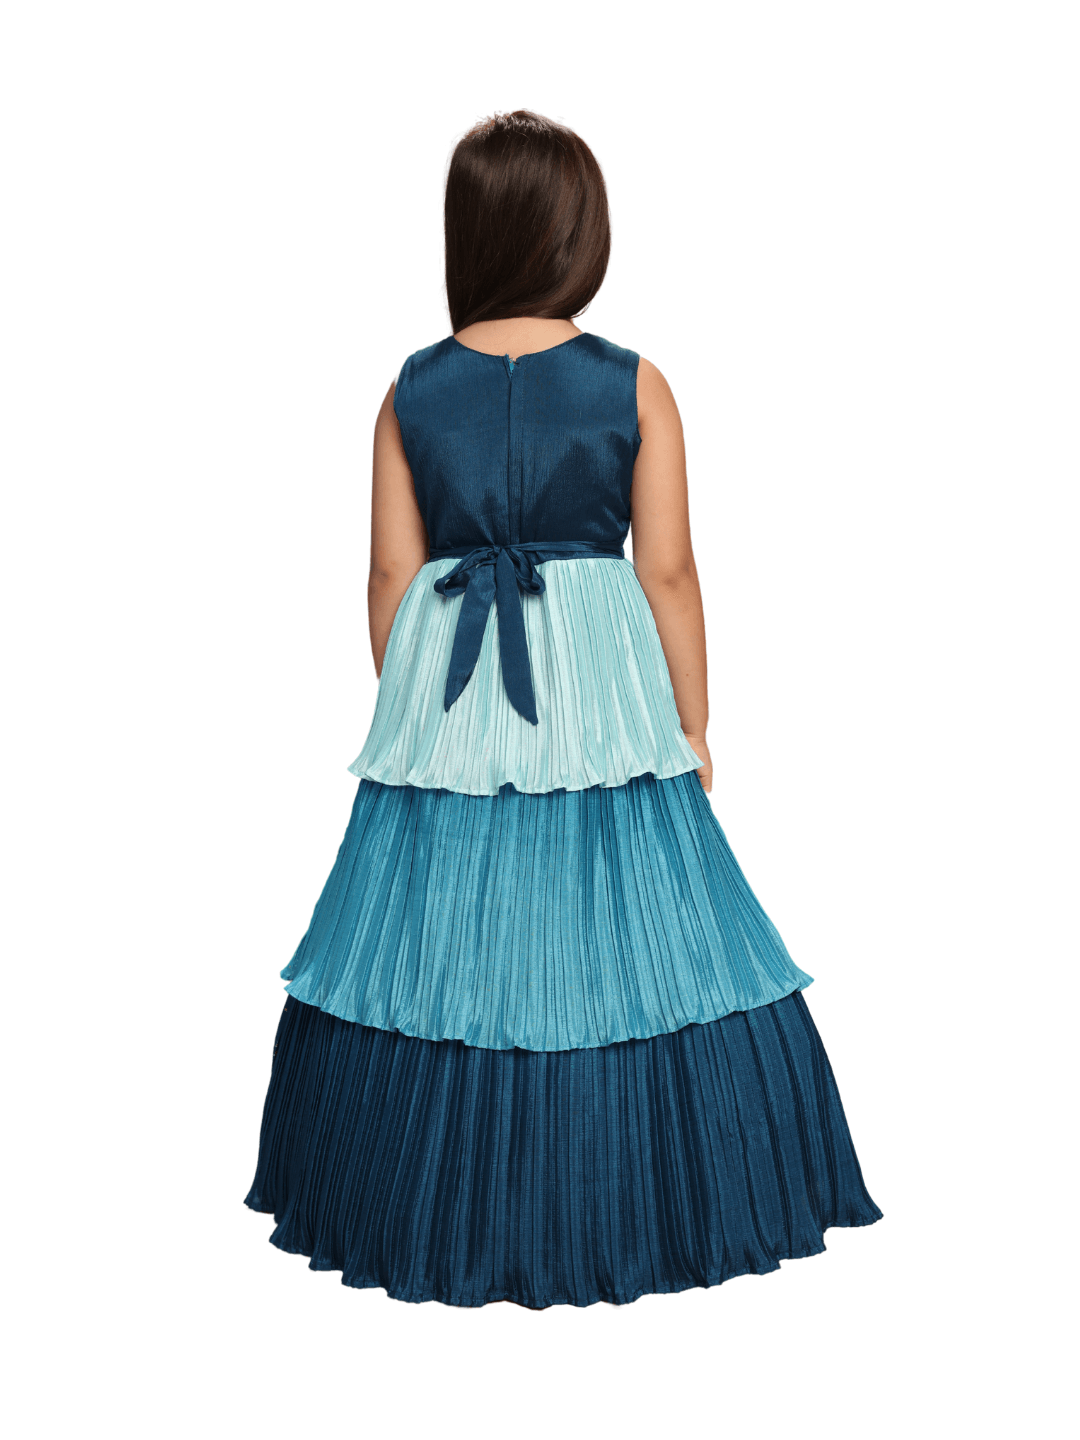 Myaara Black & Blue Cotton Lurex Ethnic Dress